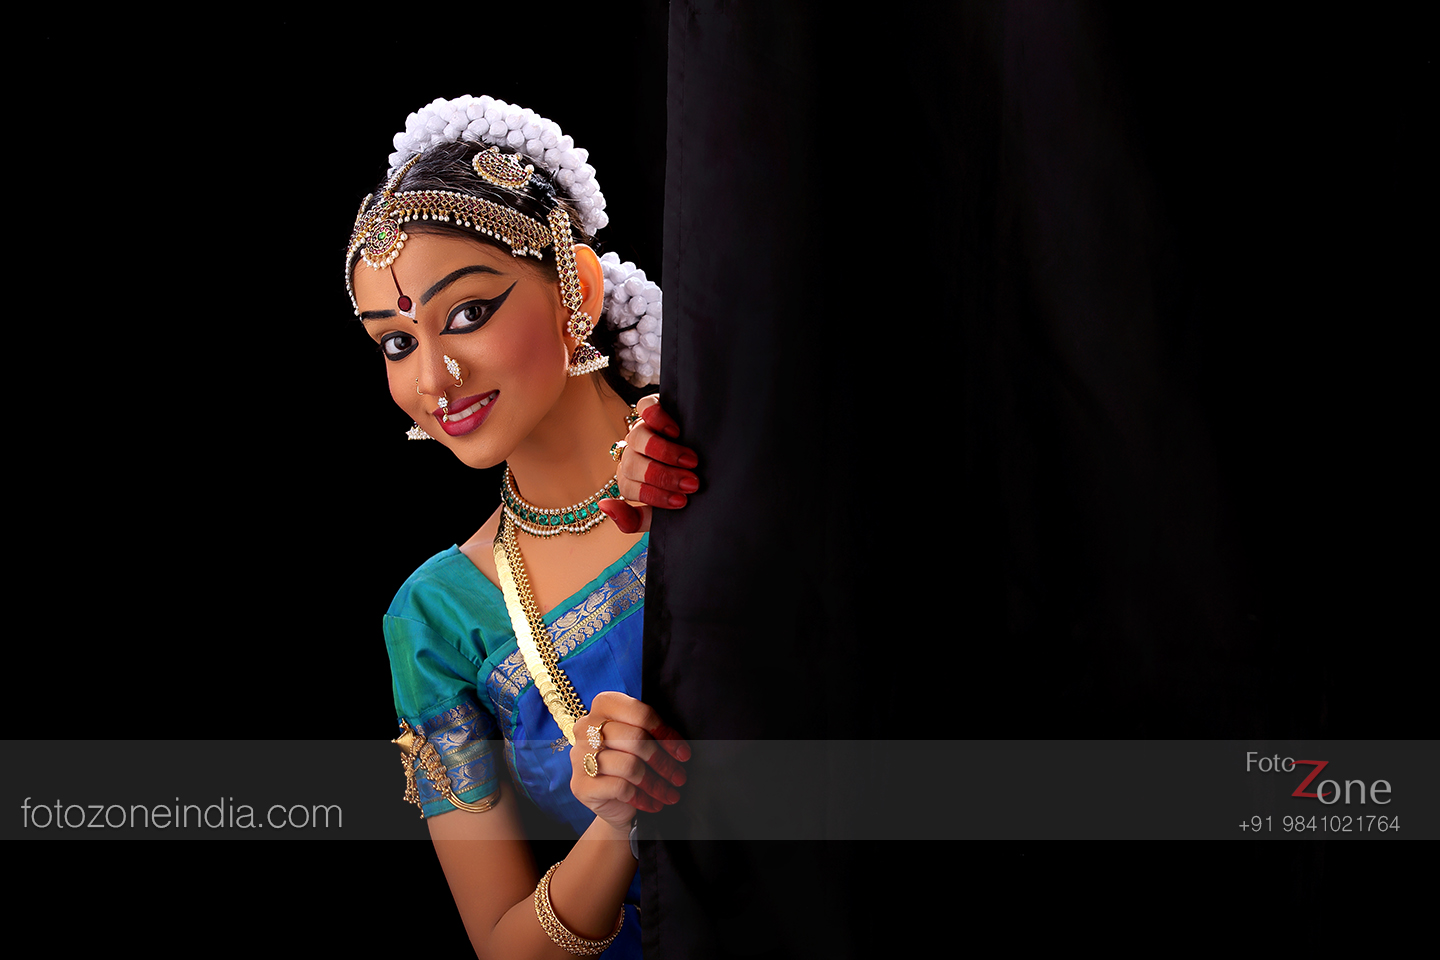 Classical Dance Photographer - Poses | Mudras | Arangetram